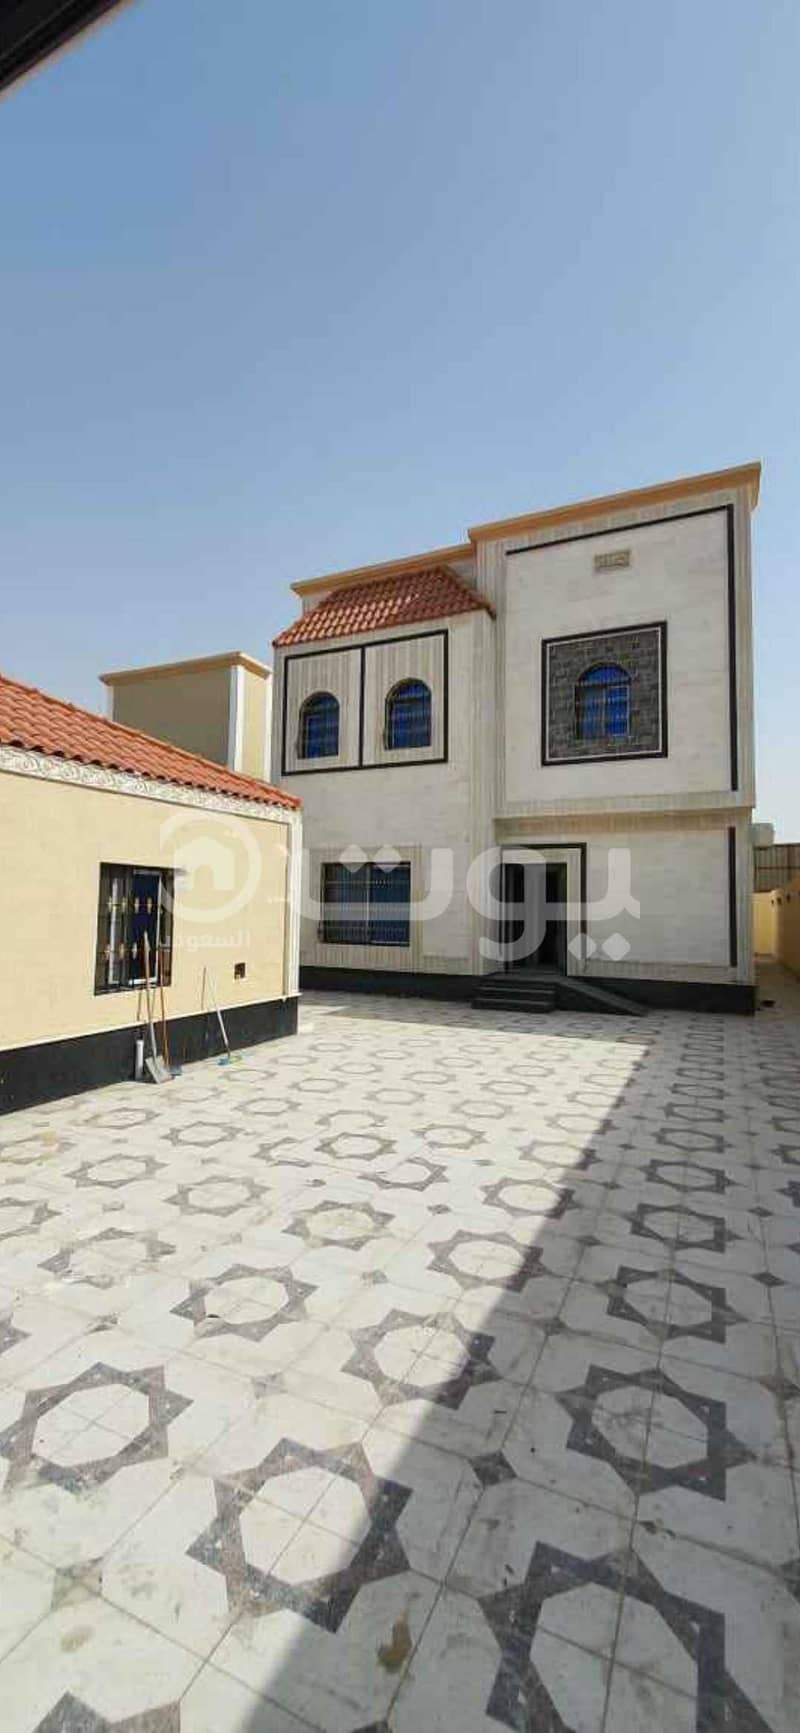 For sale detached duplex villas in Al Lulu, Al Khobar